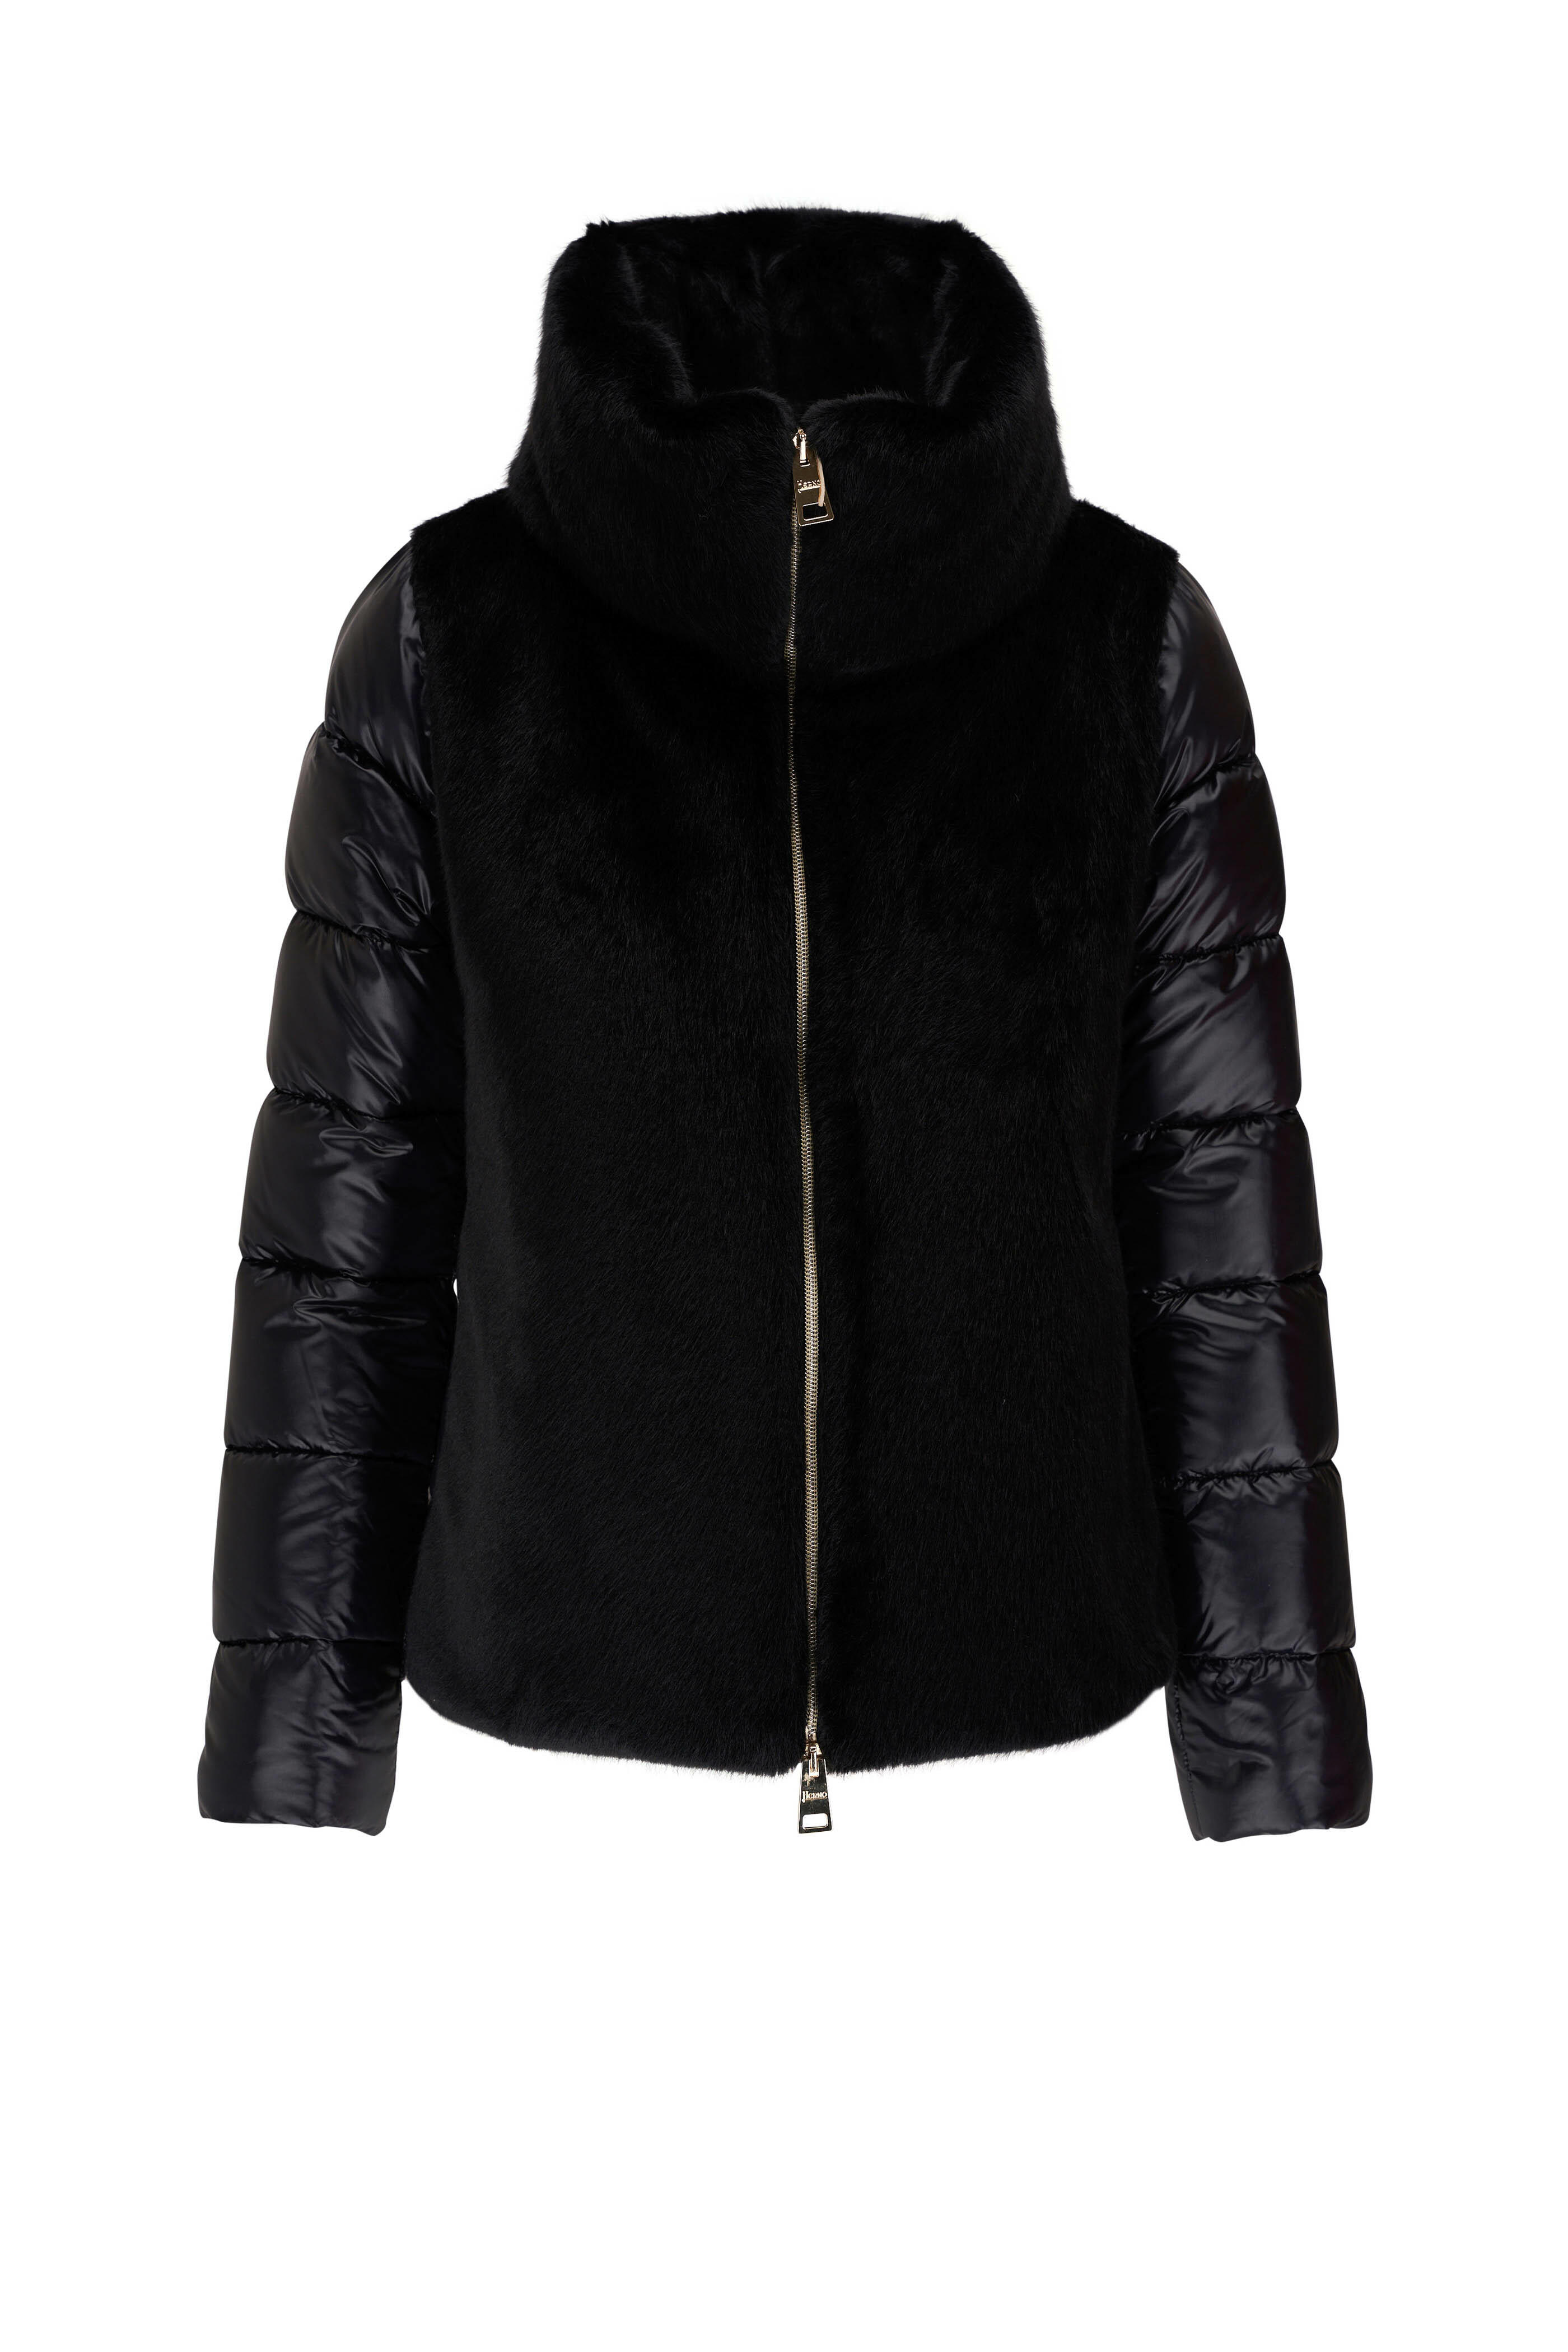 Herno - Ultralight Black Faux Fur & Nylon Jacket